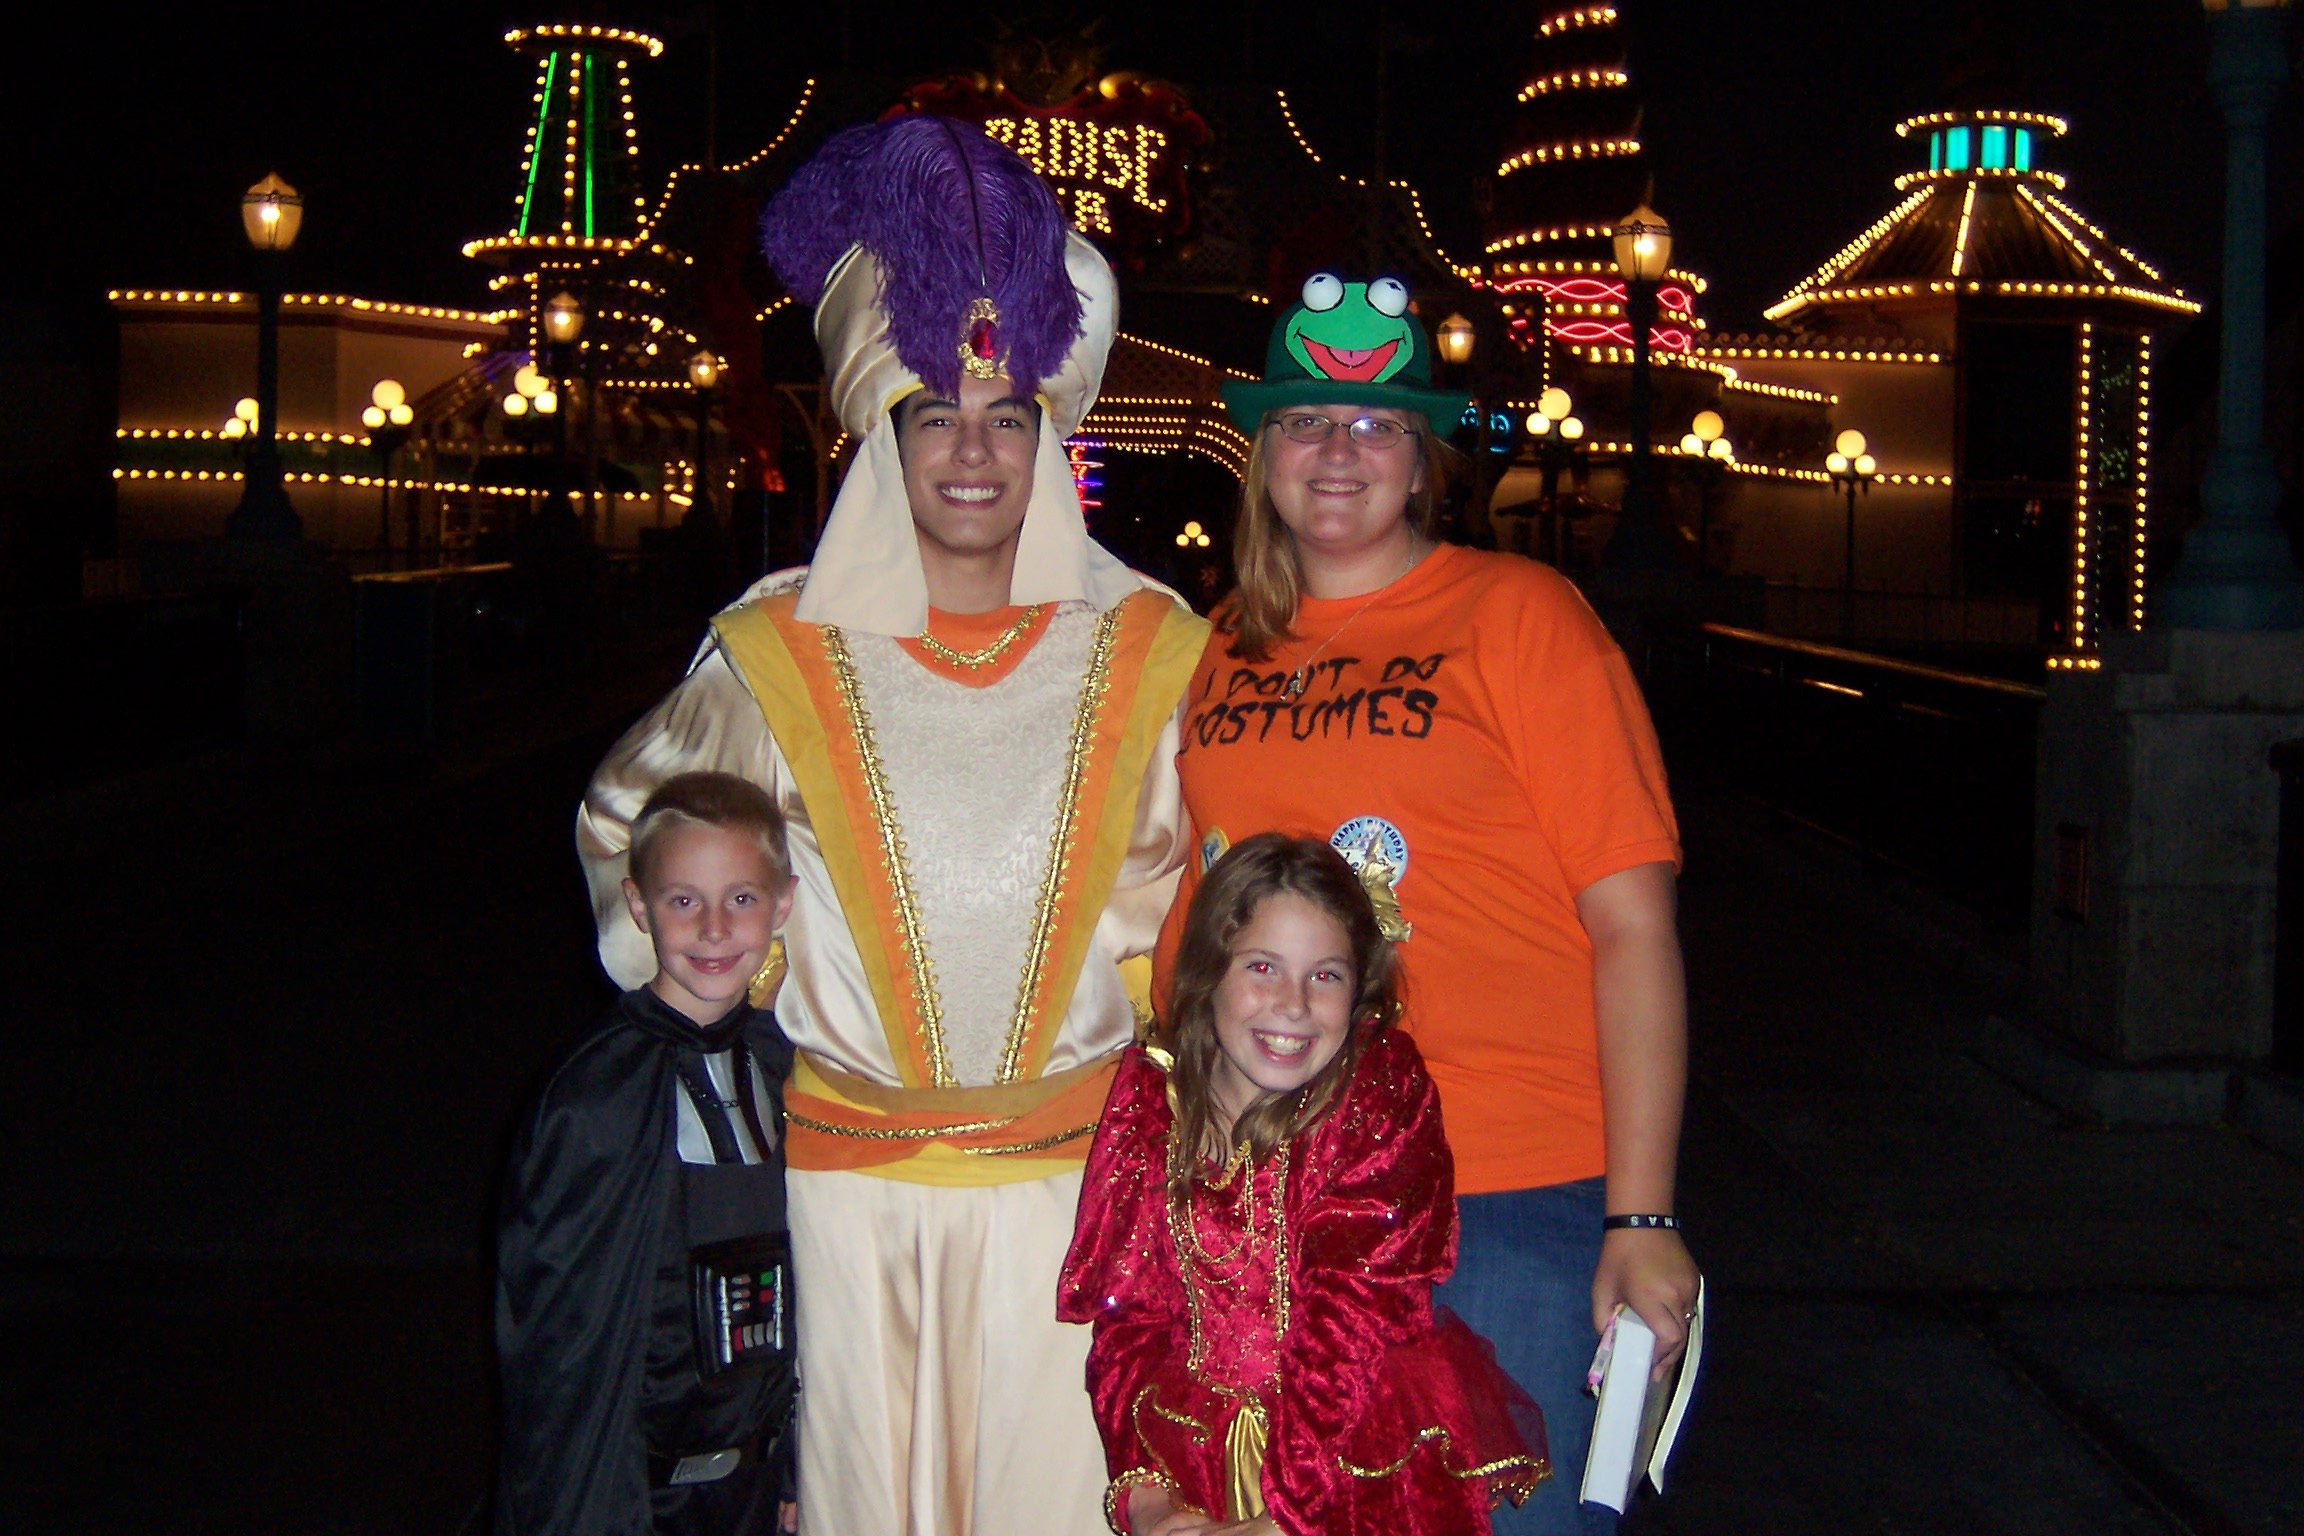 Aladdin as Prince Ali Disneyland Character Meet and Greet Mickey's Halloween Party 2007